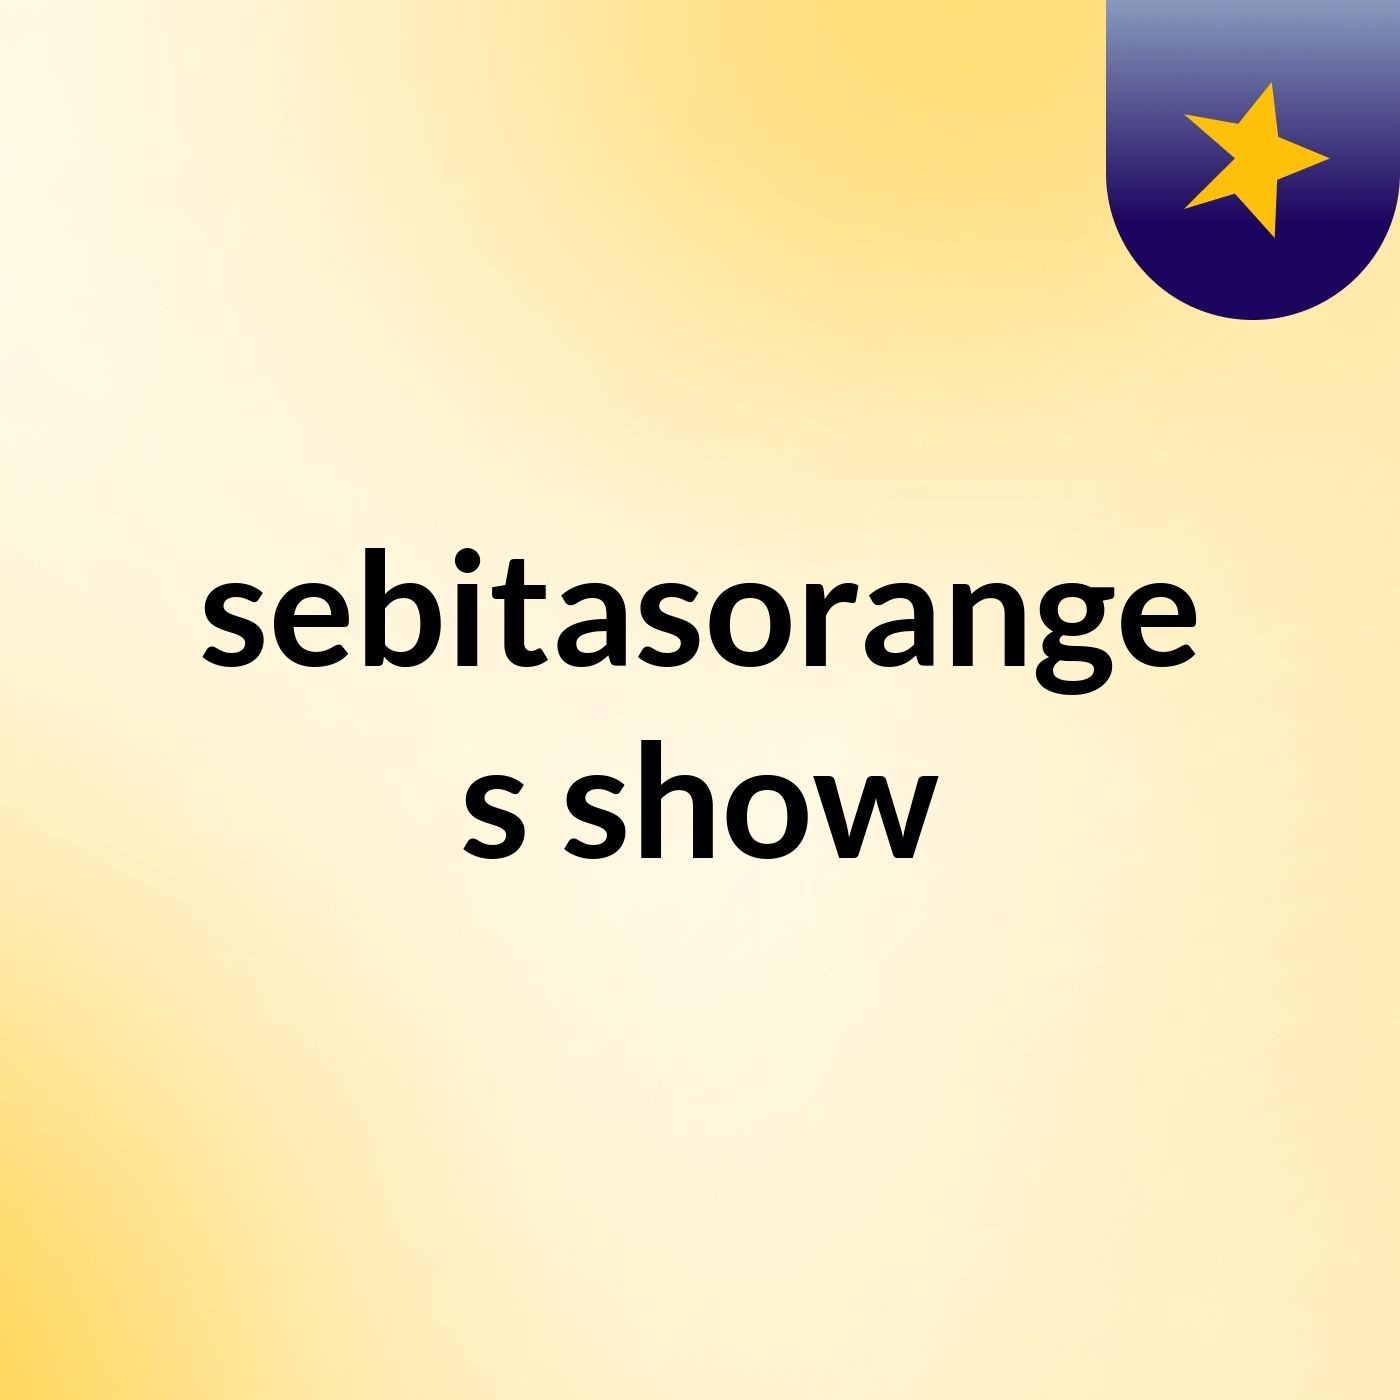 sebitasorange's show